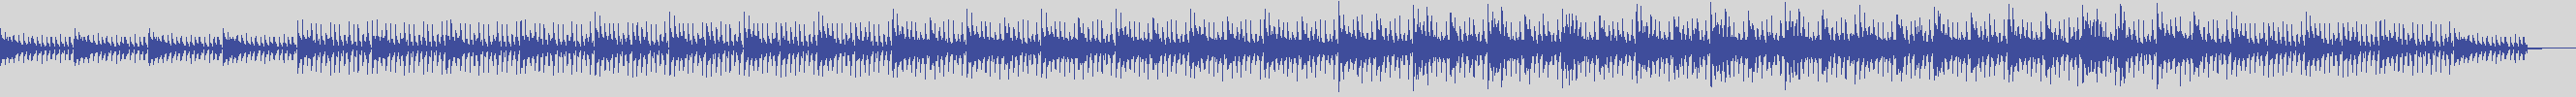 noclouds_chillout [NOC001] The Musix - Deep Senses [Original Mix] audio wave form